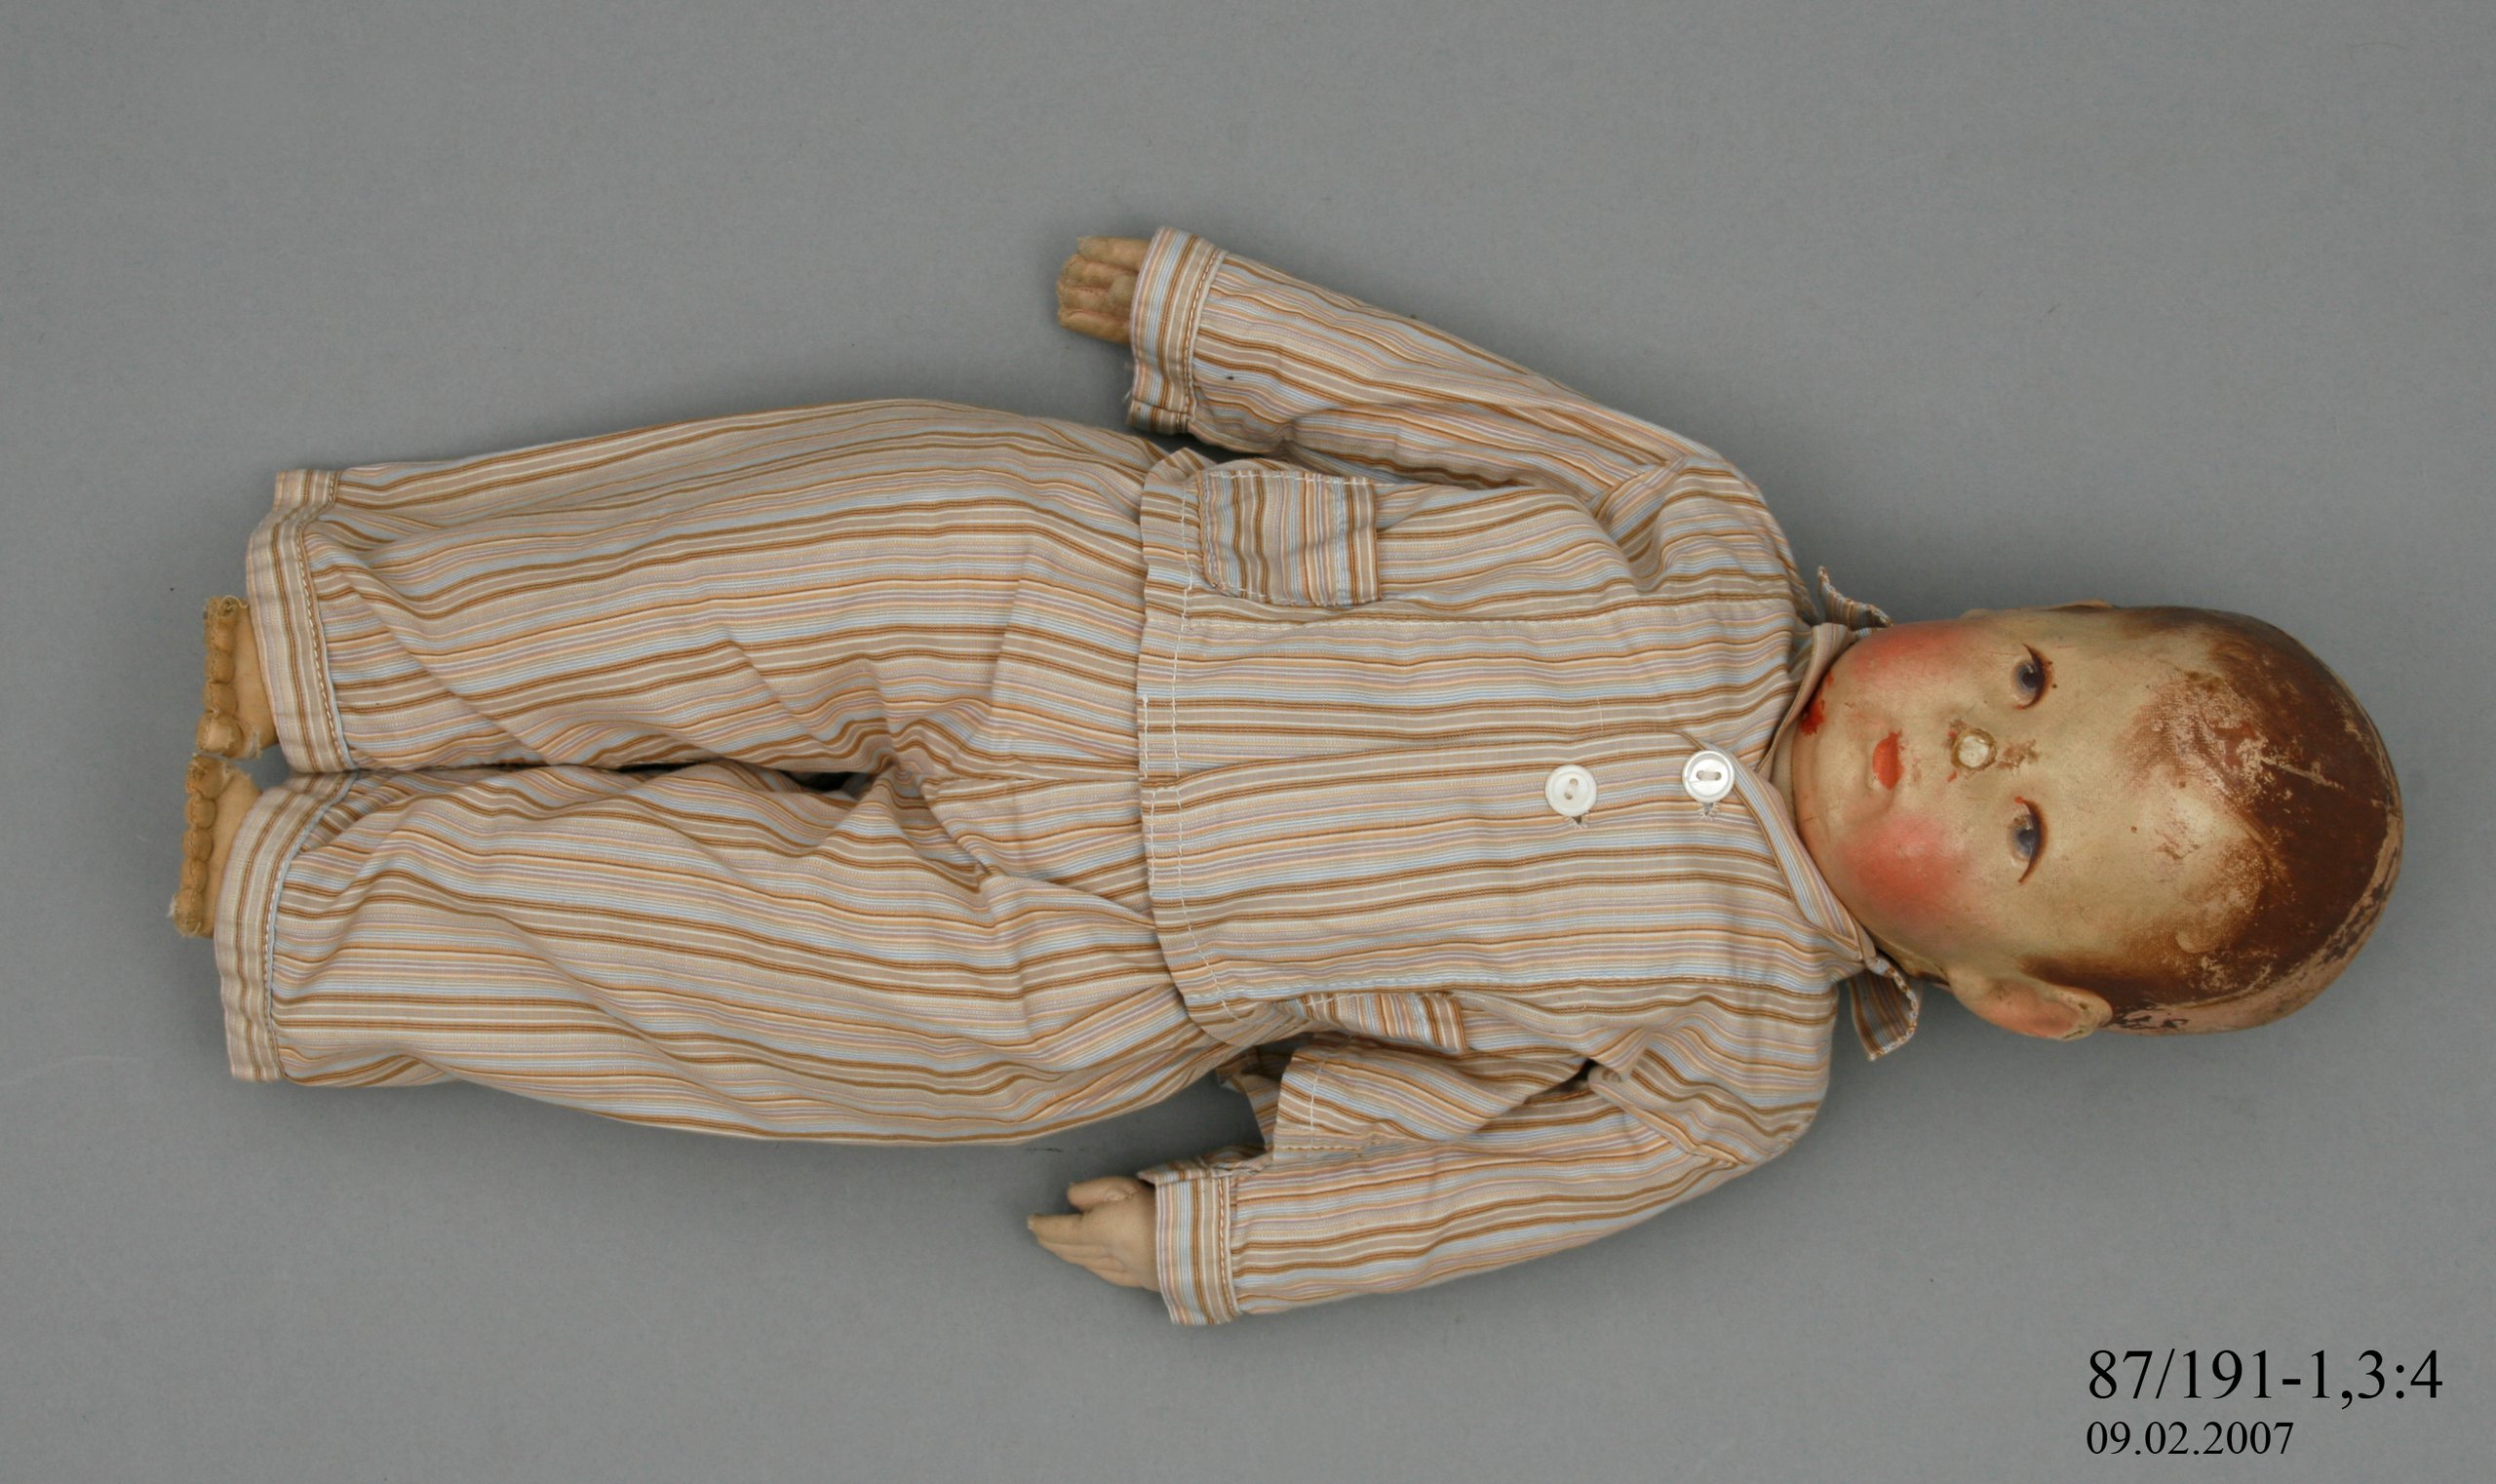 'Sasha' doll made by Kathe Kruse